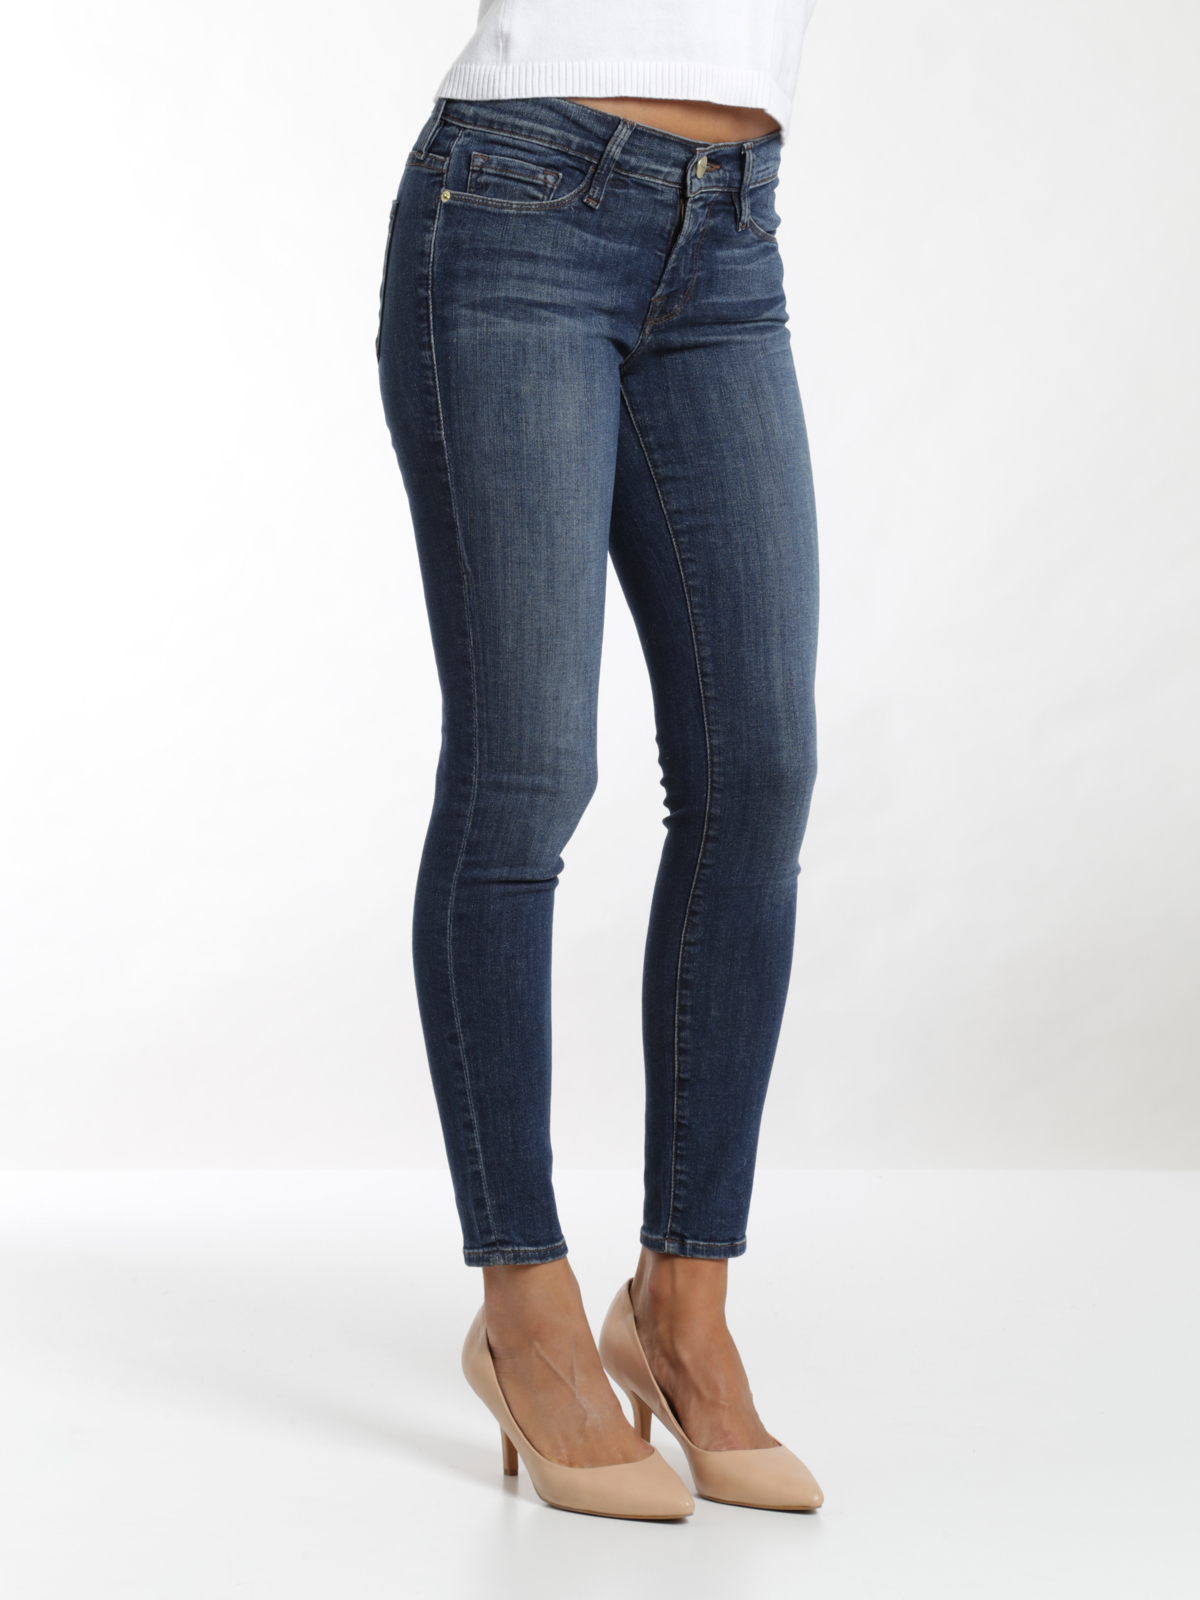 Jaarlijks werkelijk dood Skinny jeans Frame Denim - King Man Jeans - LSJC899 | Shop online at iKRIX